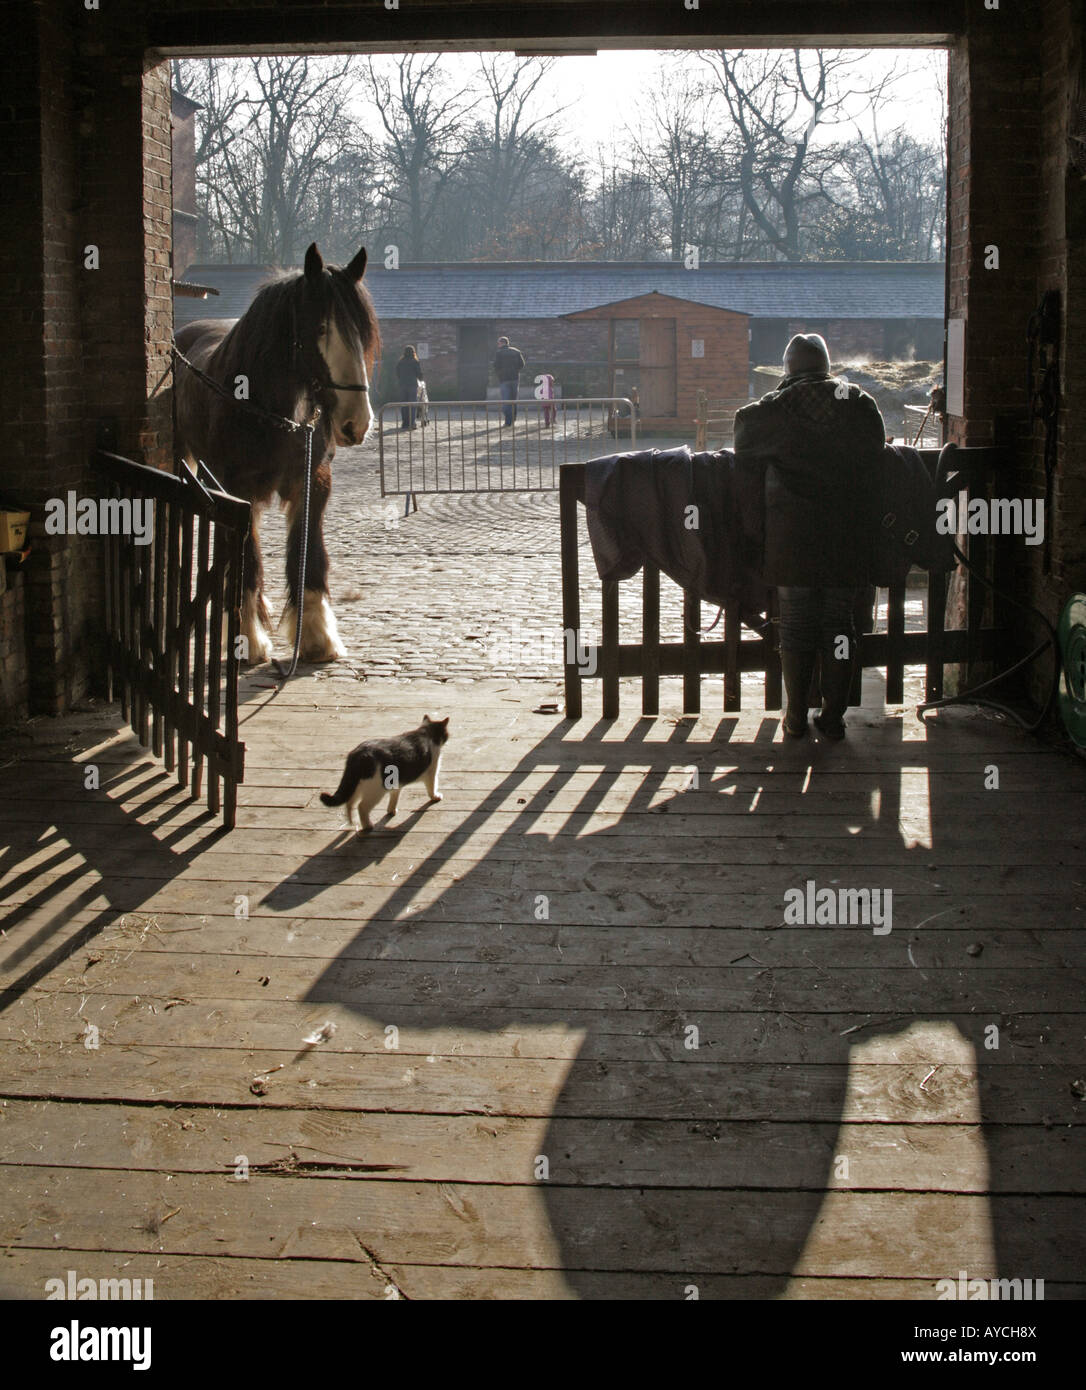 Horse wooden floor cat shadows trees person peacful sunlight backlit livestock mood harmony Stock Photo